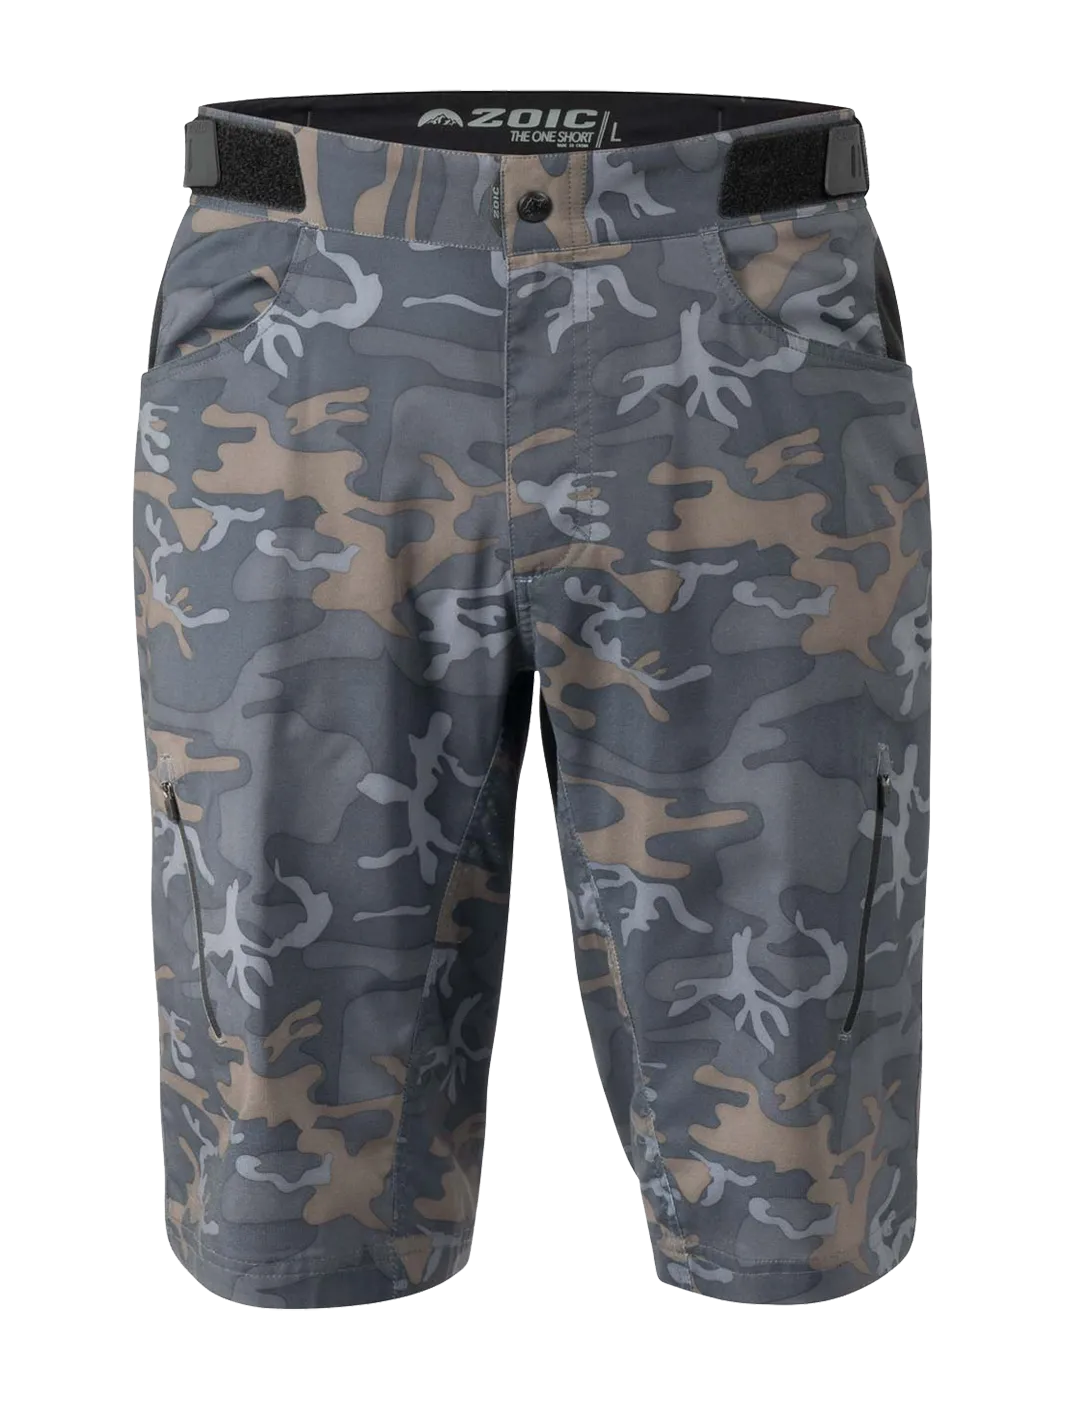 Zoic Clothing Zoic | The One Camo Shorts Grey Camo / XL